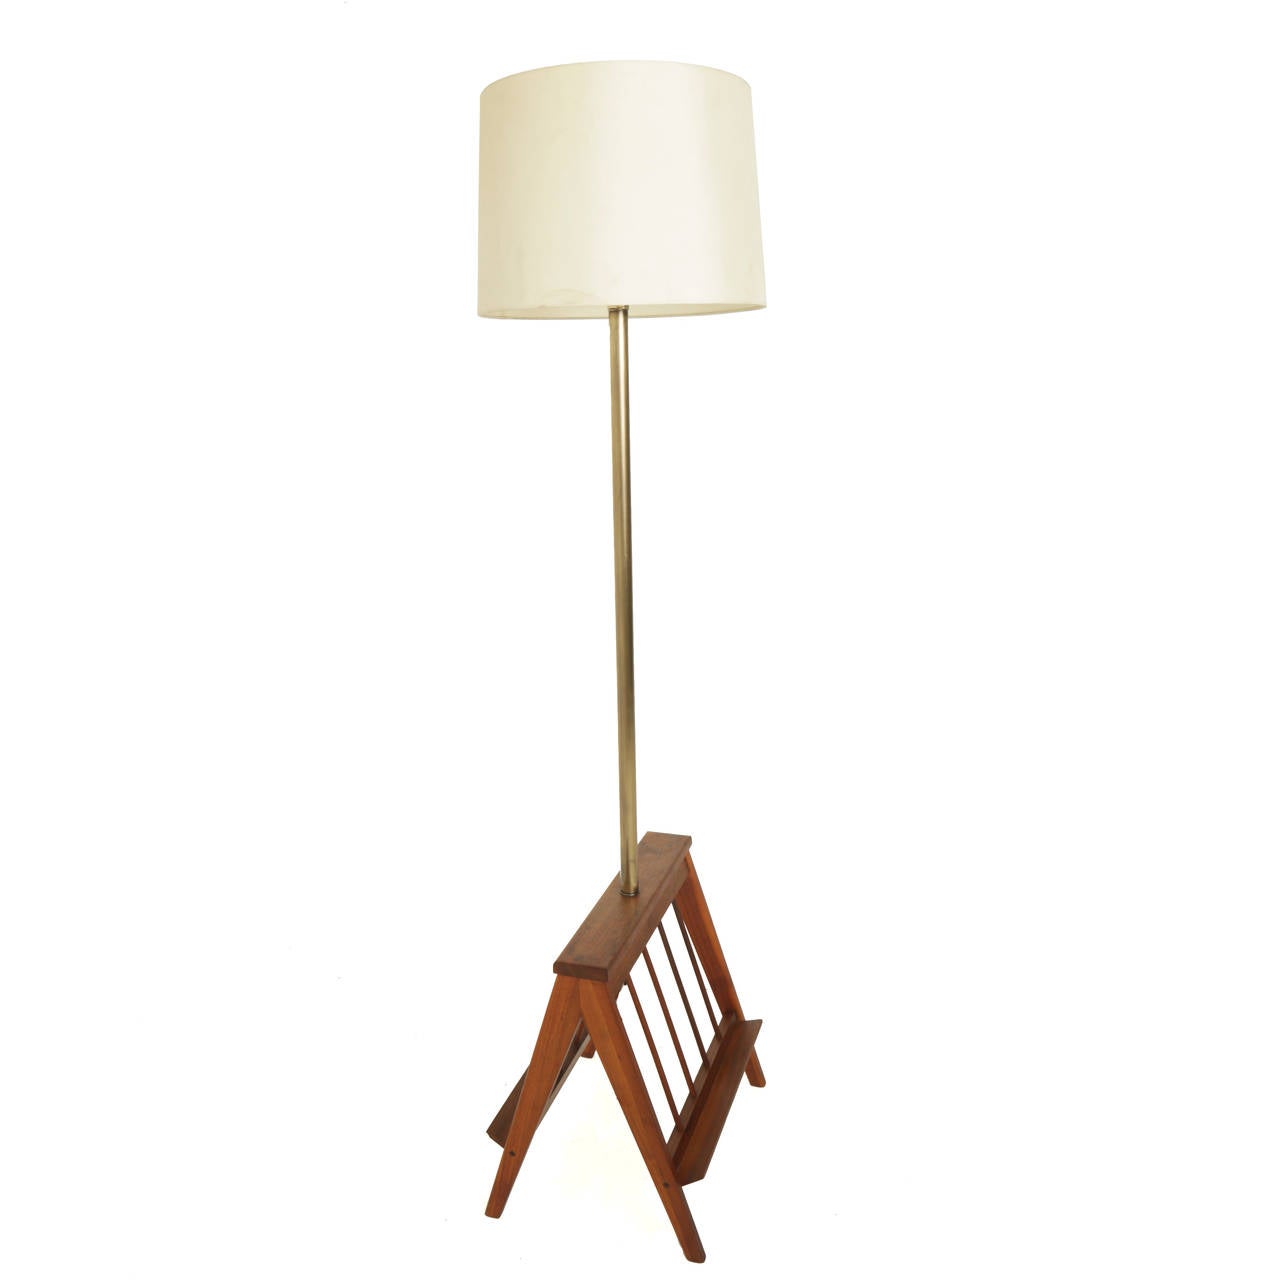 Brazilian Solid Walnut Floor Lamp With Magazine shelves